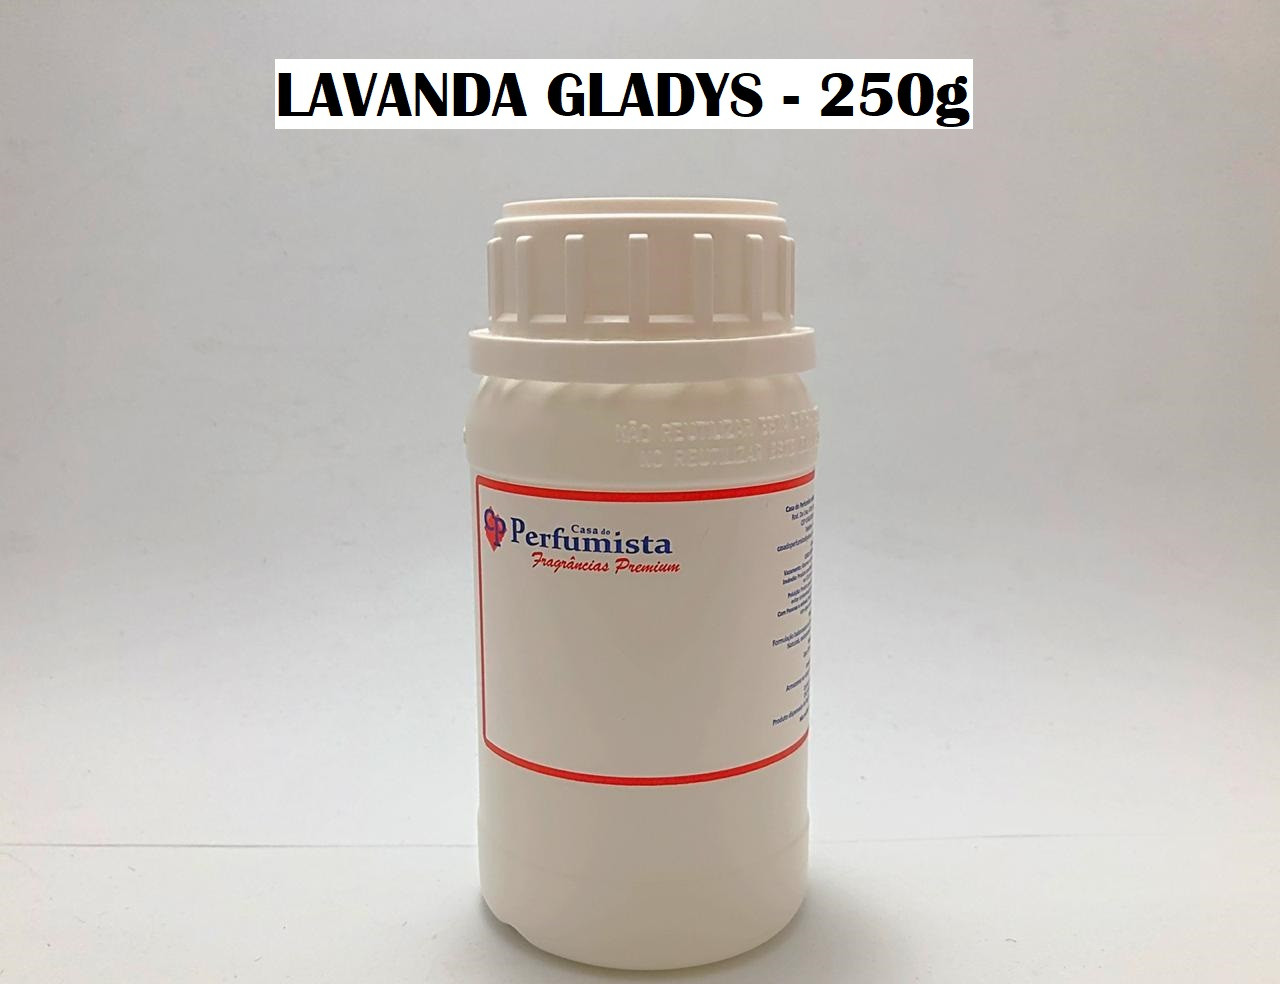 LAVANDA GLADYS - 250g